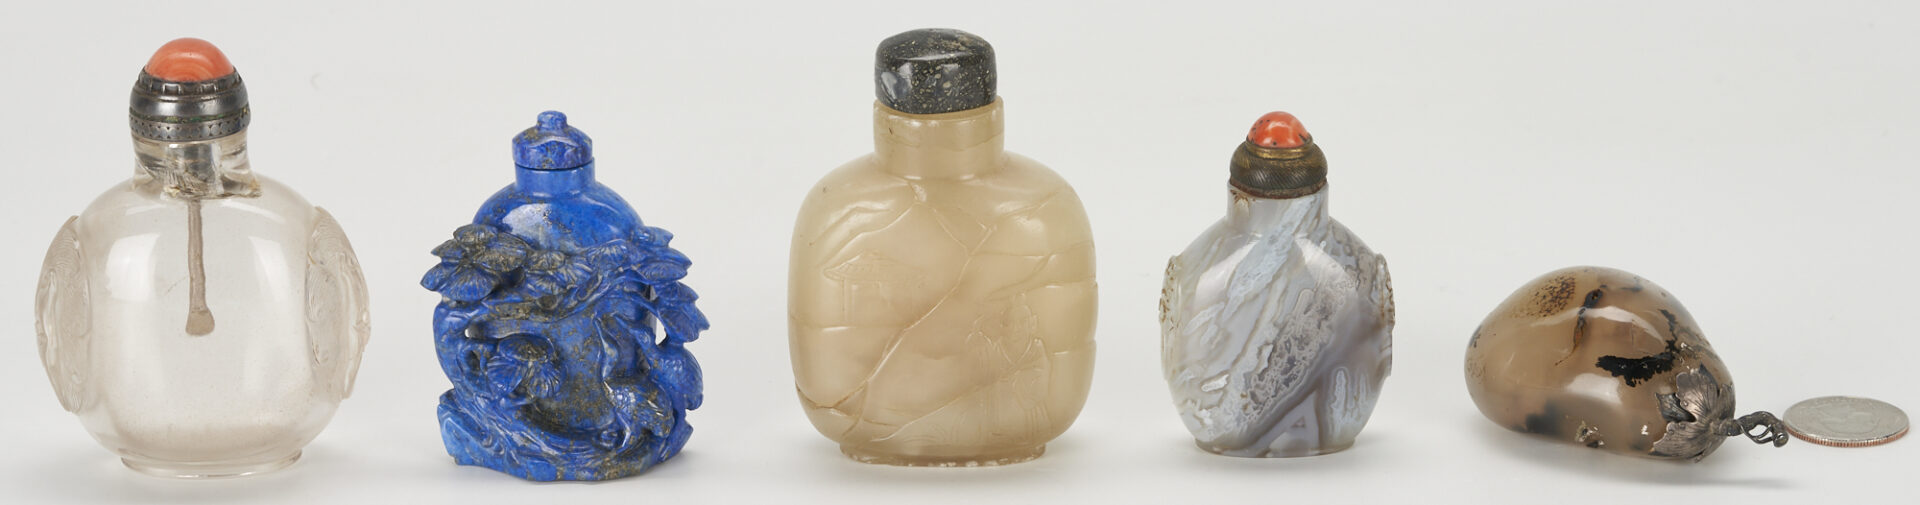 Lot 3: 5 Carved Asian Snuff Bottles, incl. Lapis, Rock Quartz, Hardstone, Agate